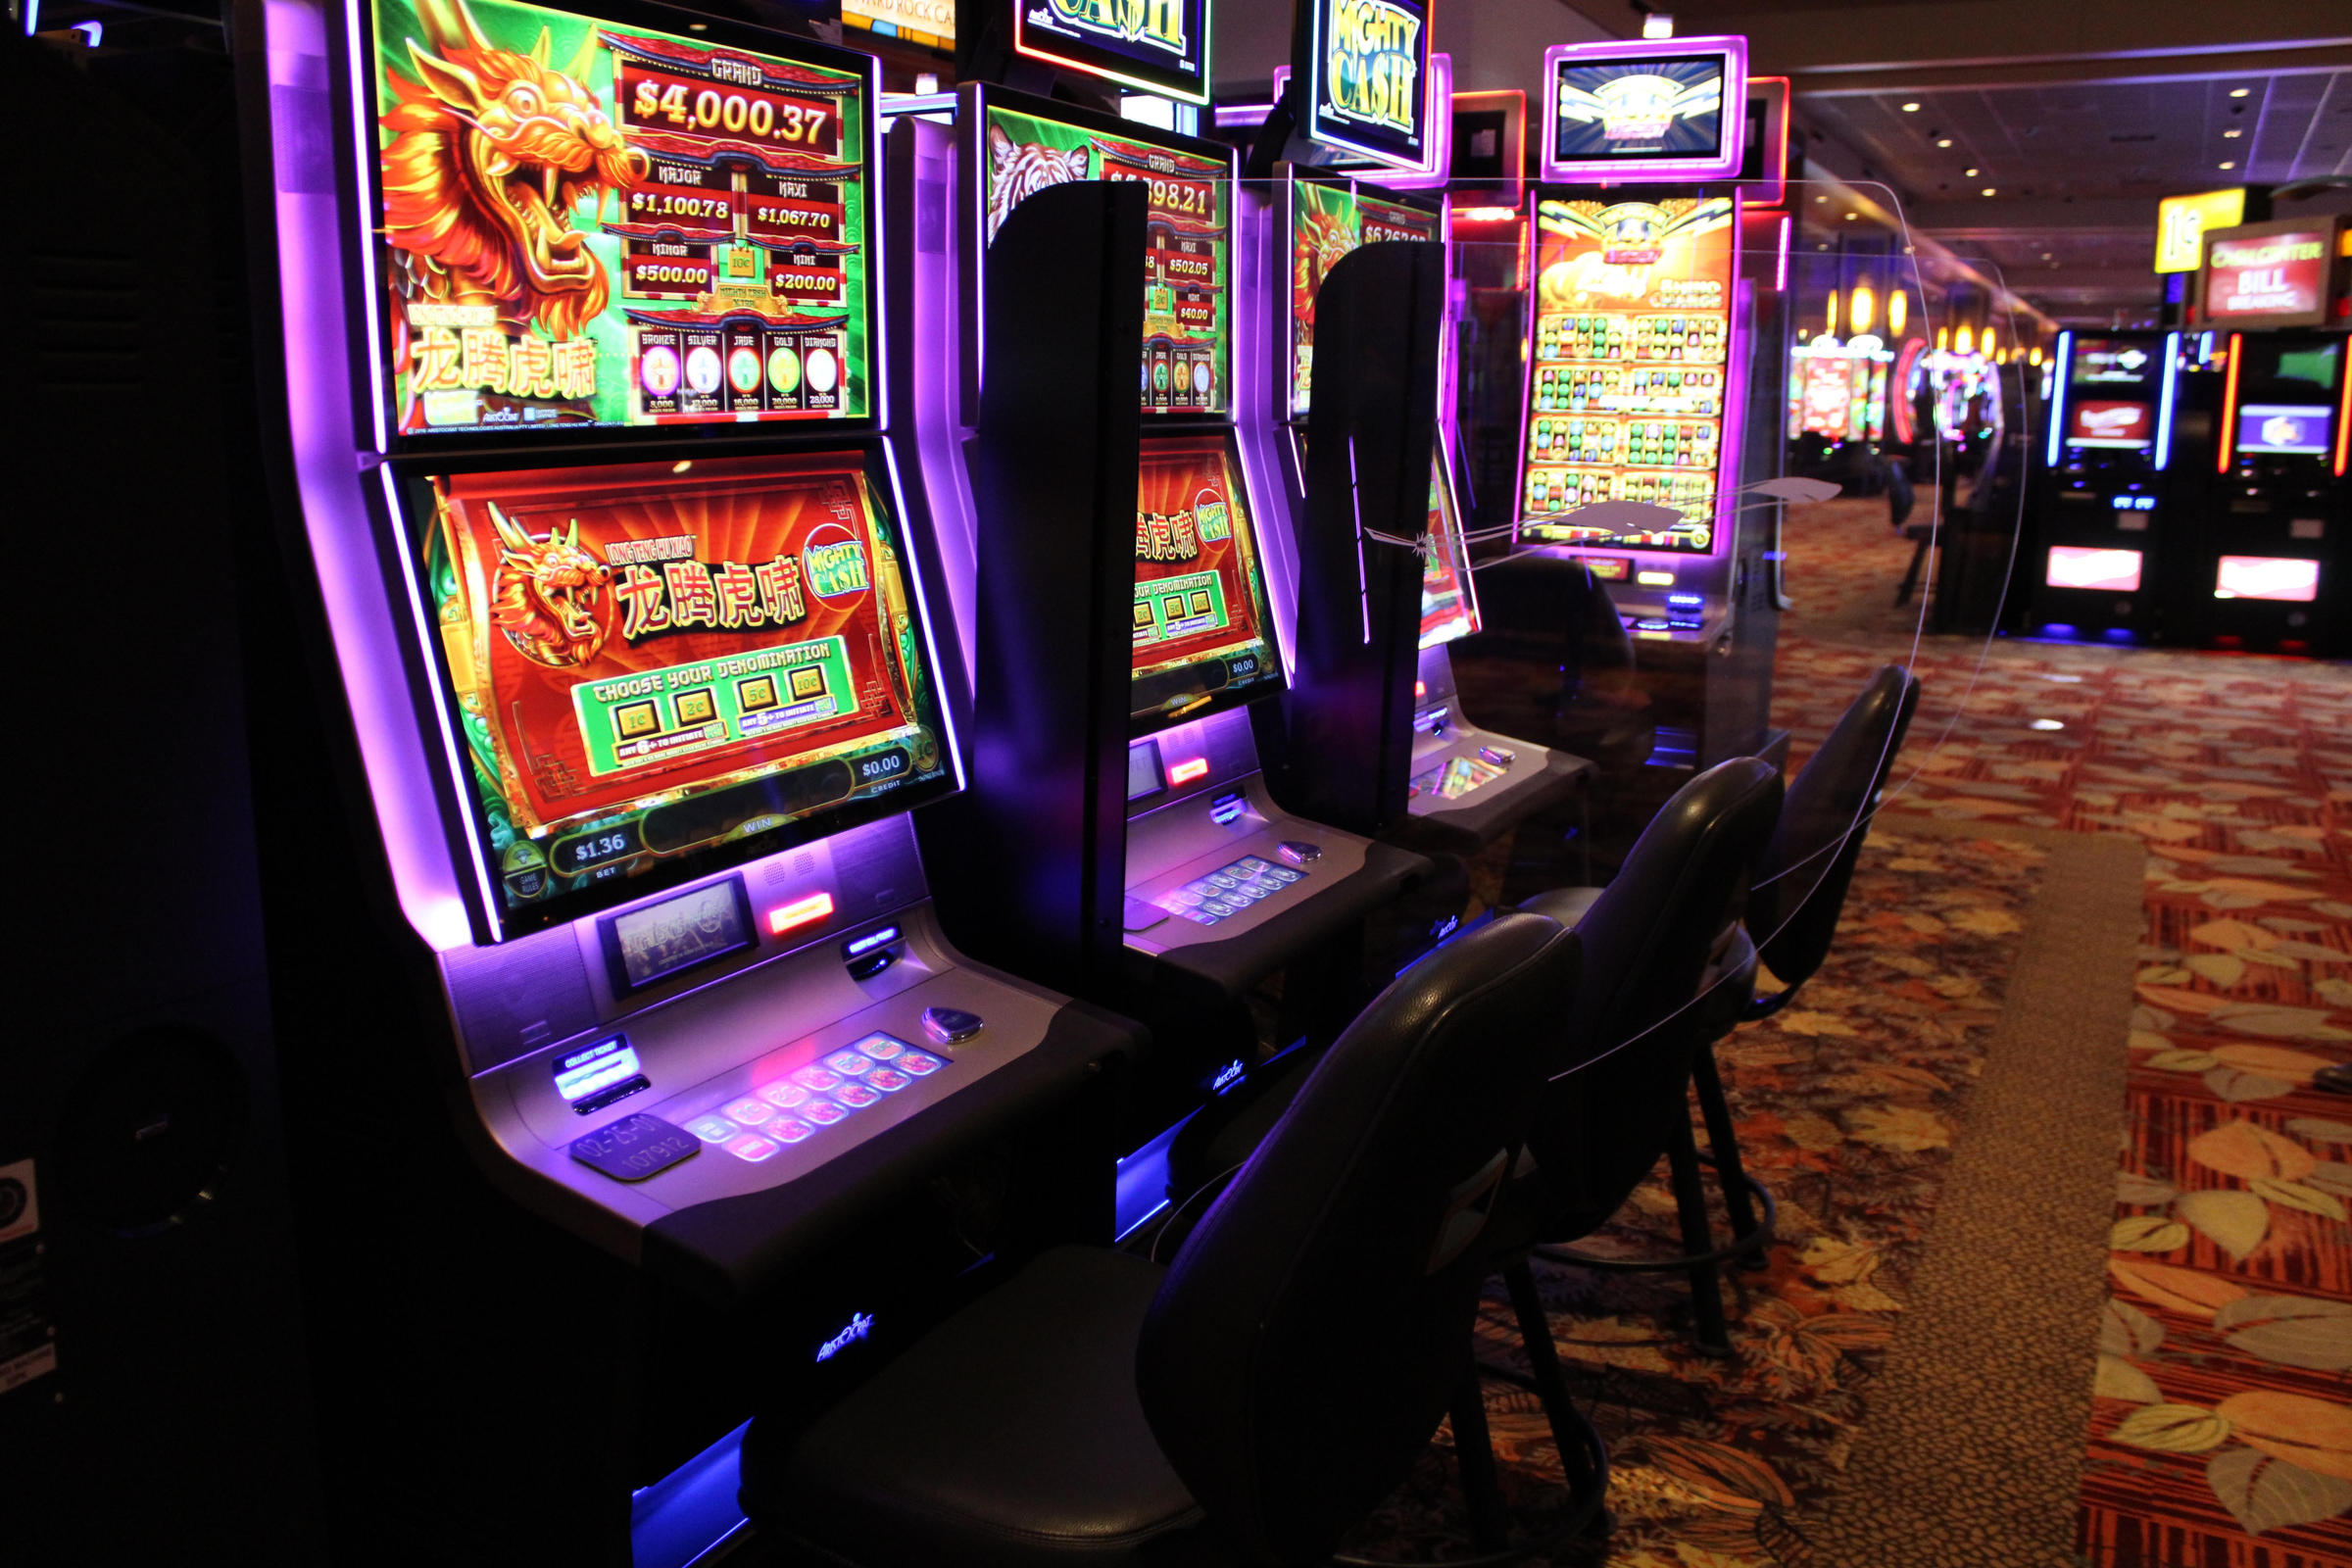 four winds casino michigan warrent check